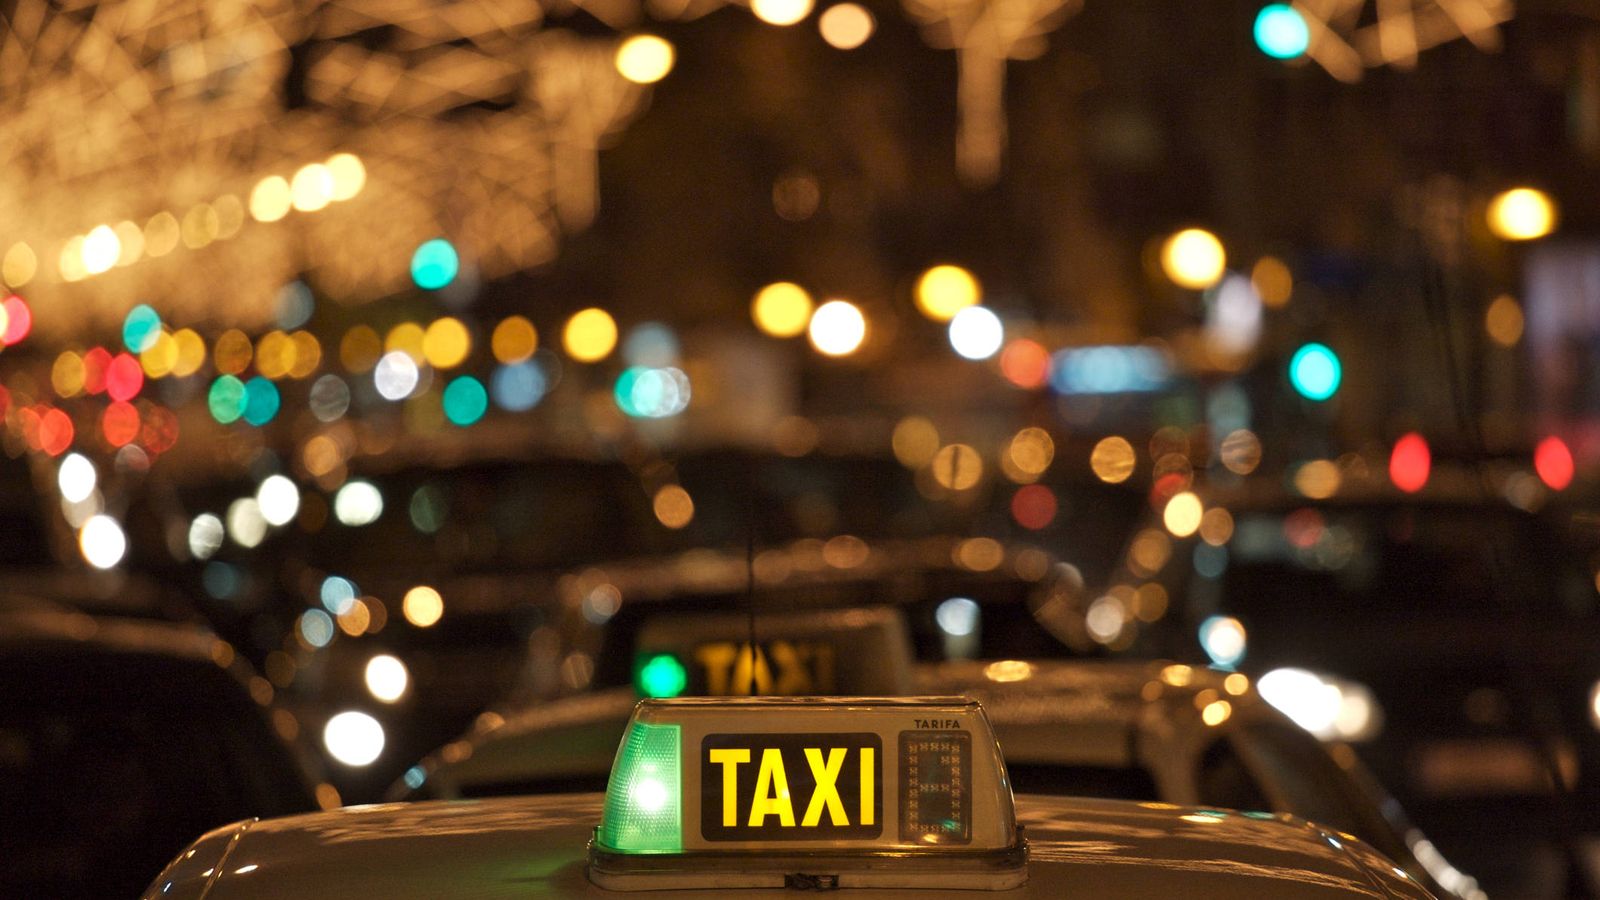 Foto: Taxi de Madrid. iStock